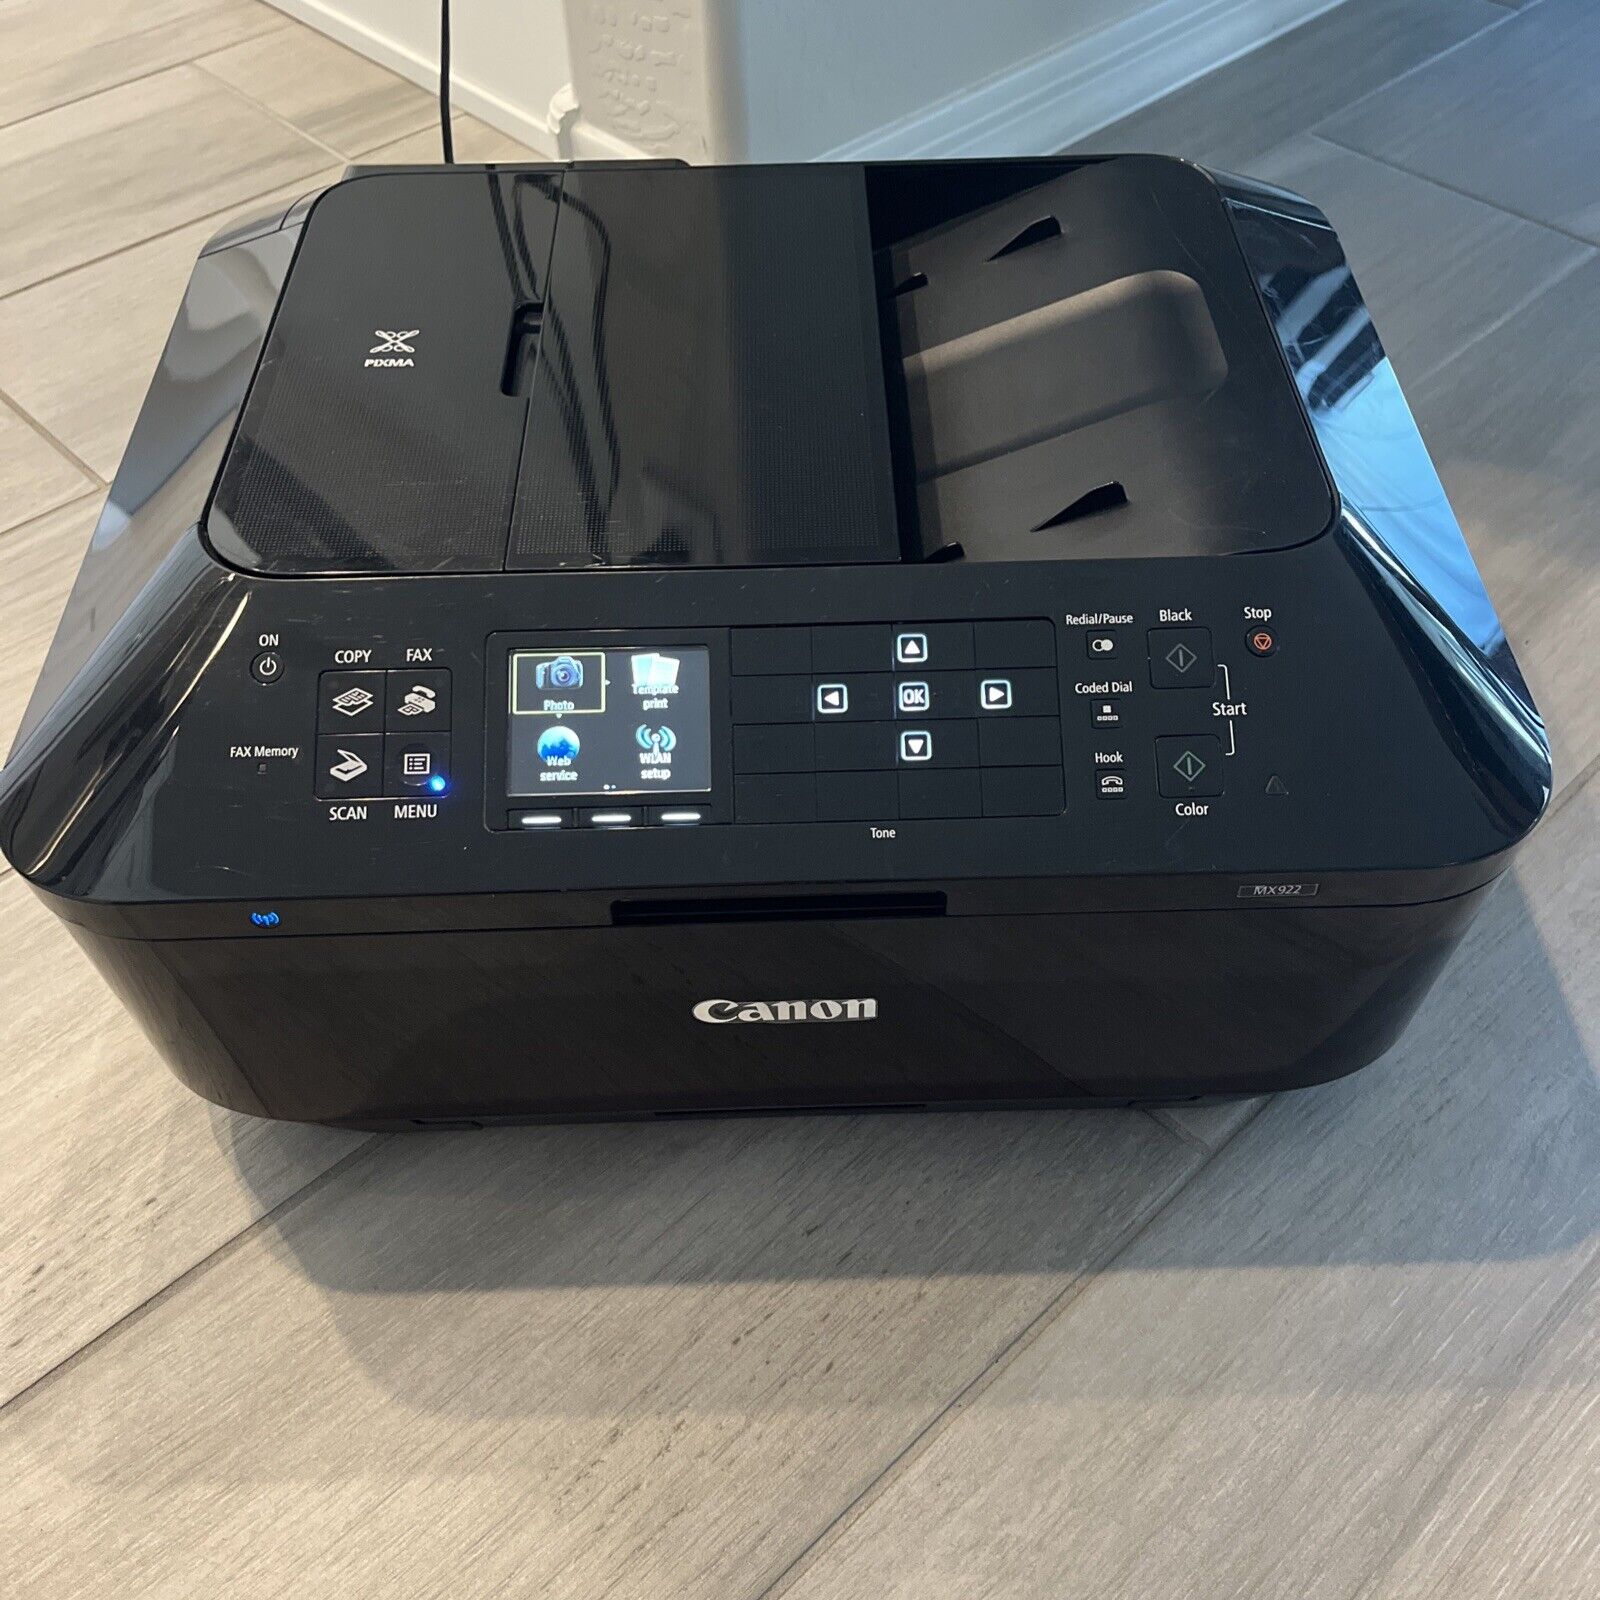 Canon PIXMA MX922 Wireless Office All-in-One Printer - 9600 dpi Color - Works